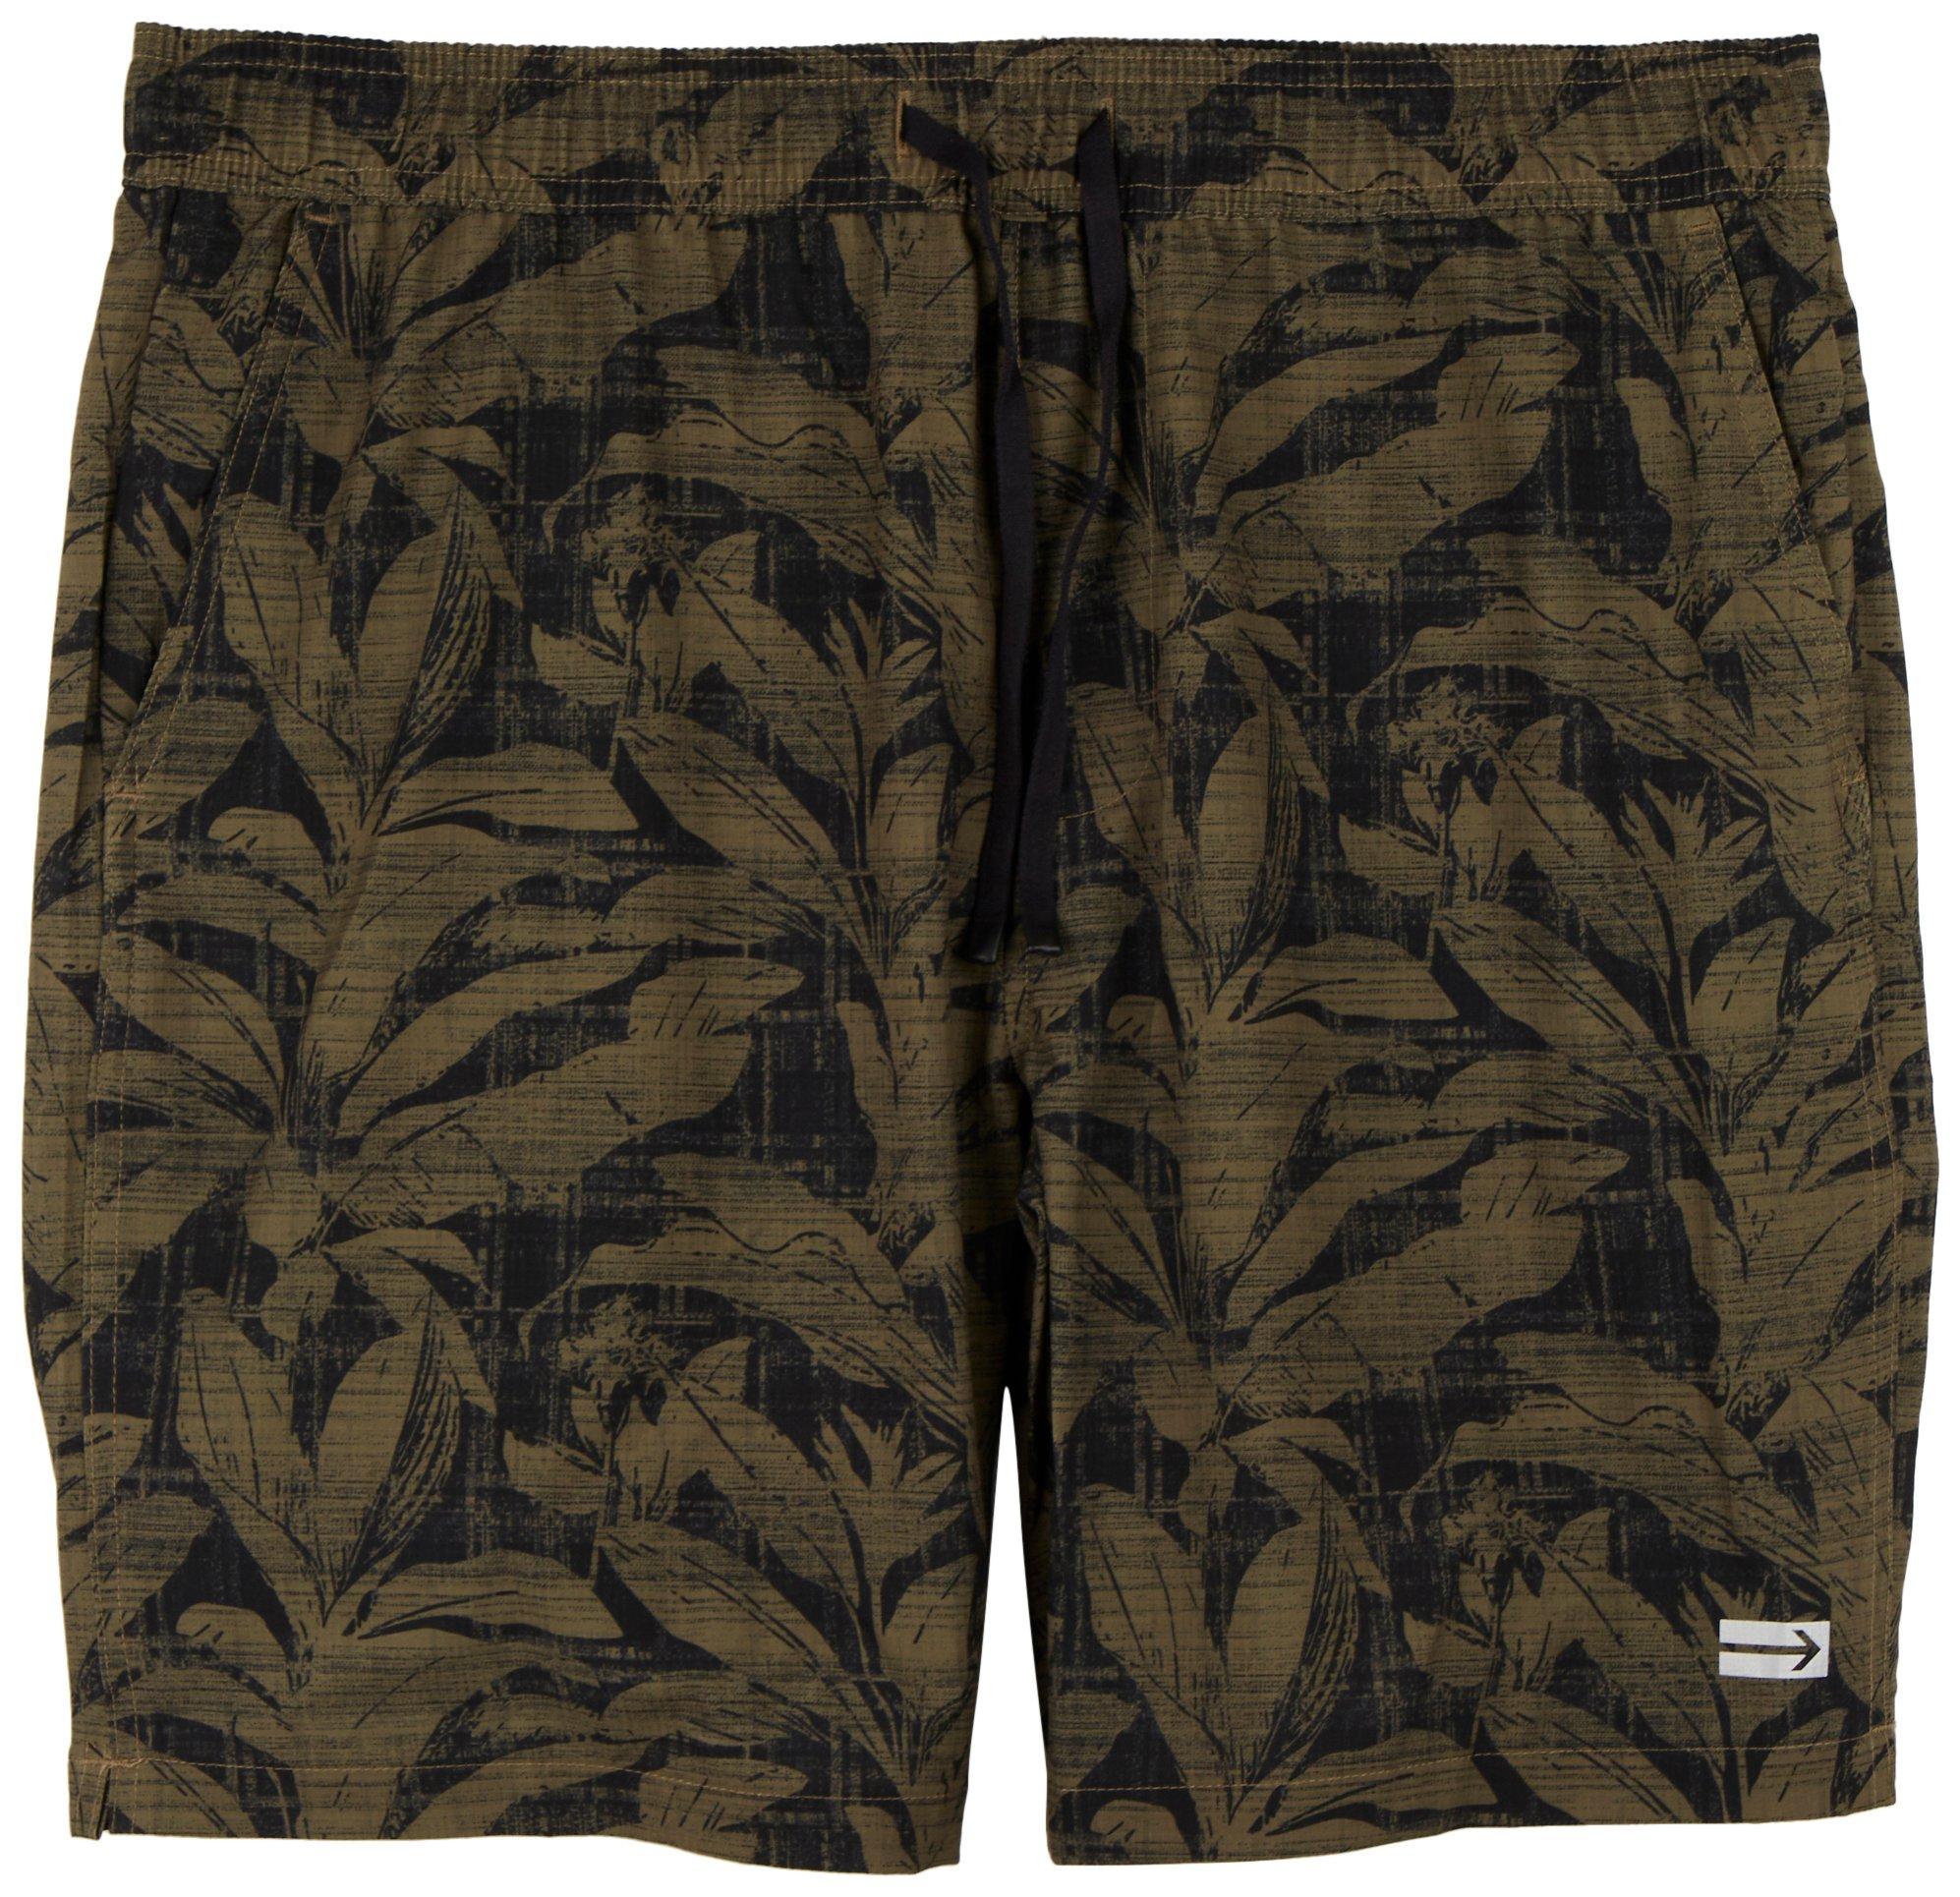 PROJEK RAW Mens 8.5 Palm Olive Swim Shorts